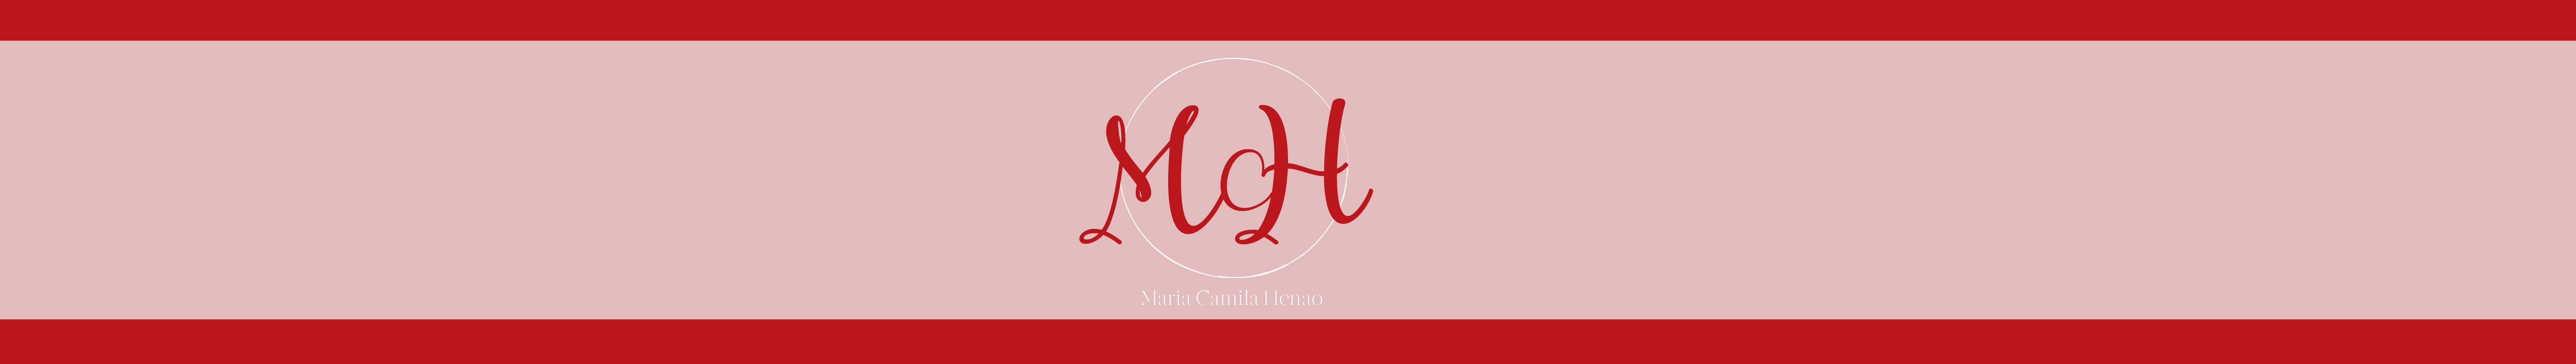 Maria Camila Henao's profile banner